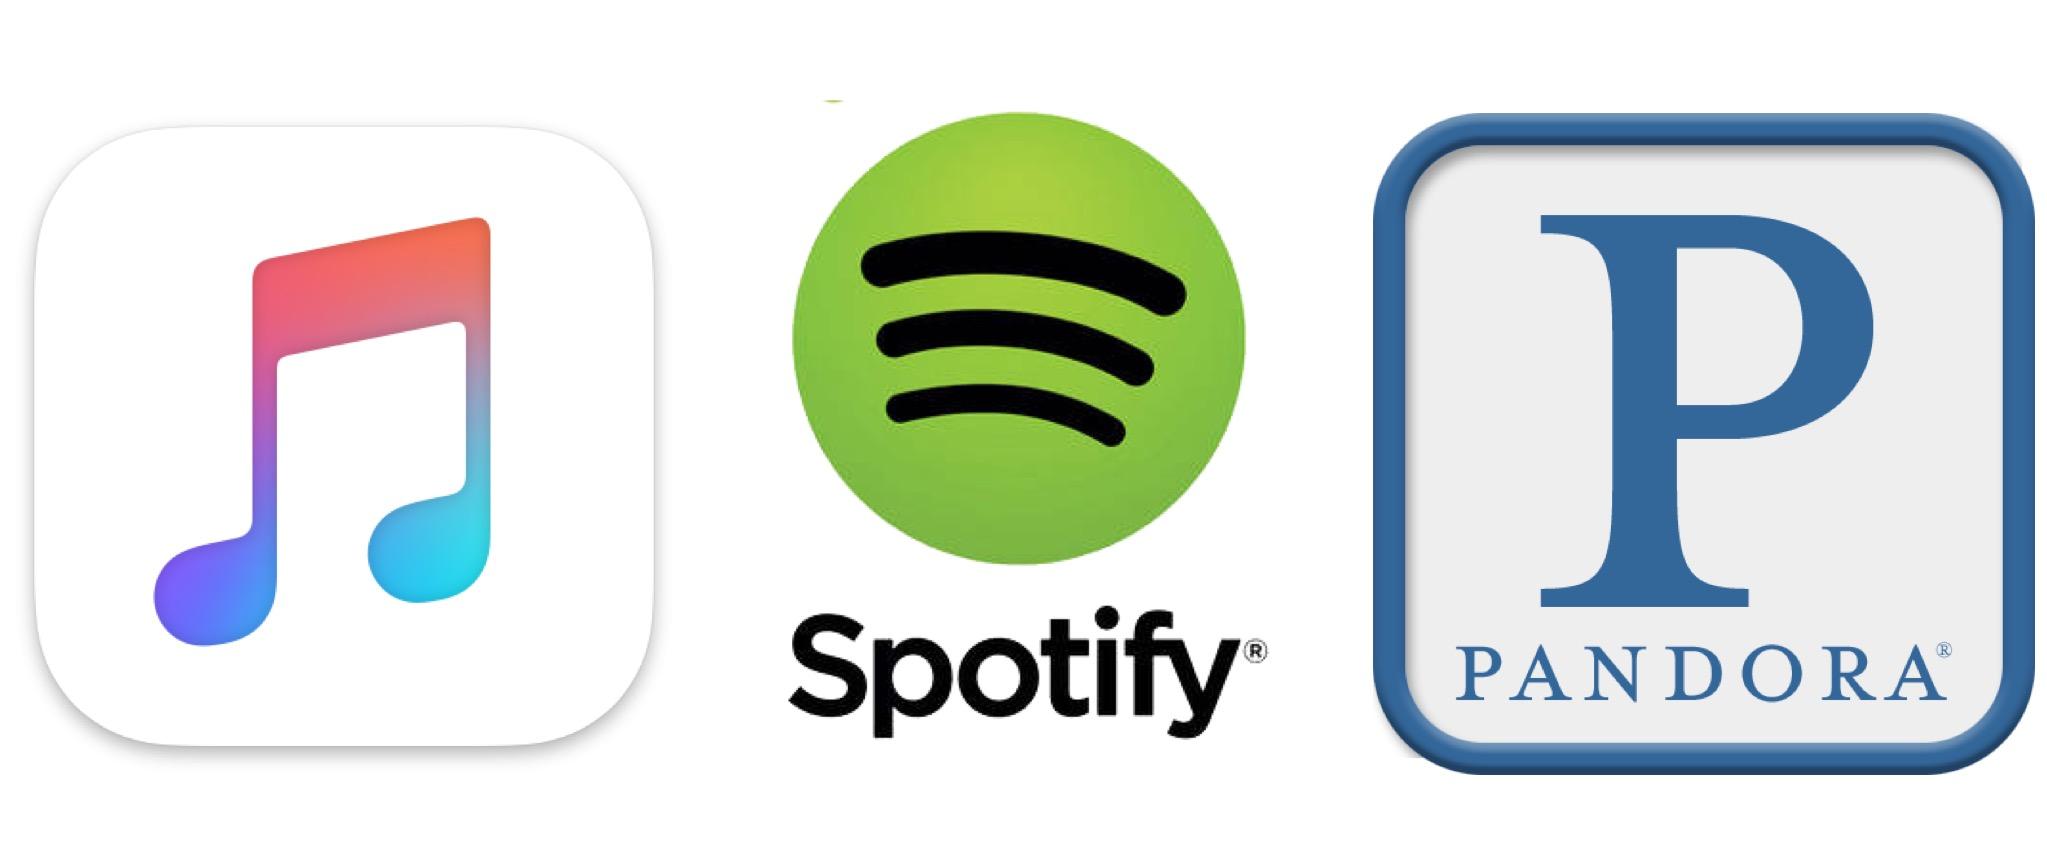 apple music vs spotify vs google music